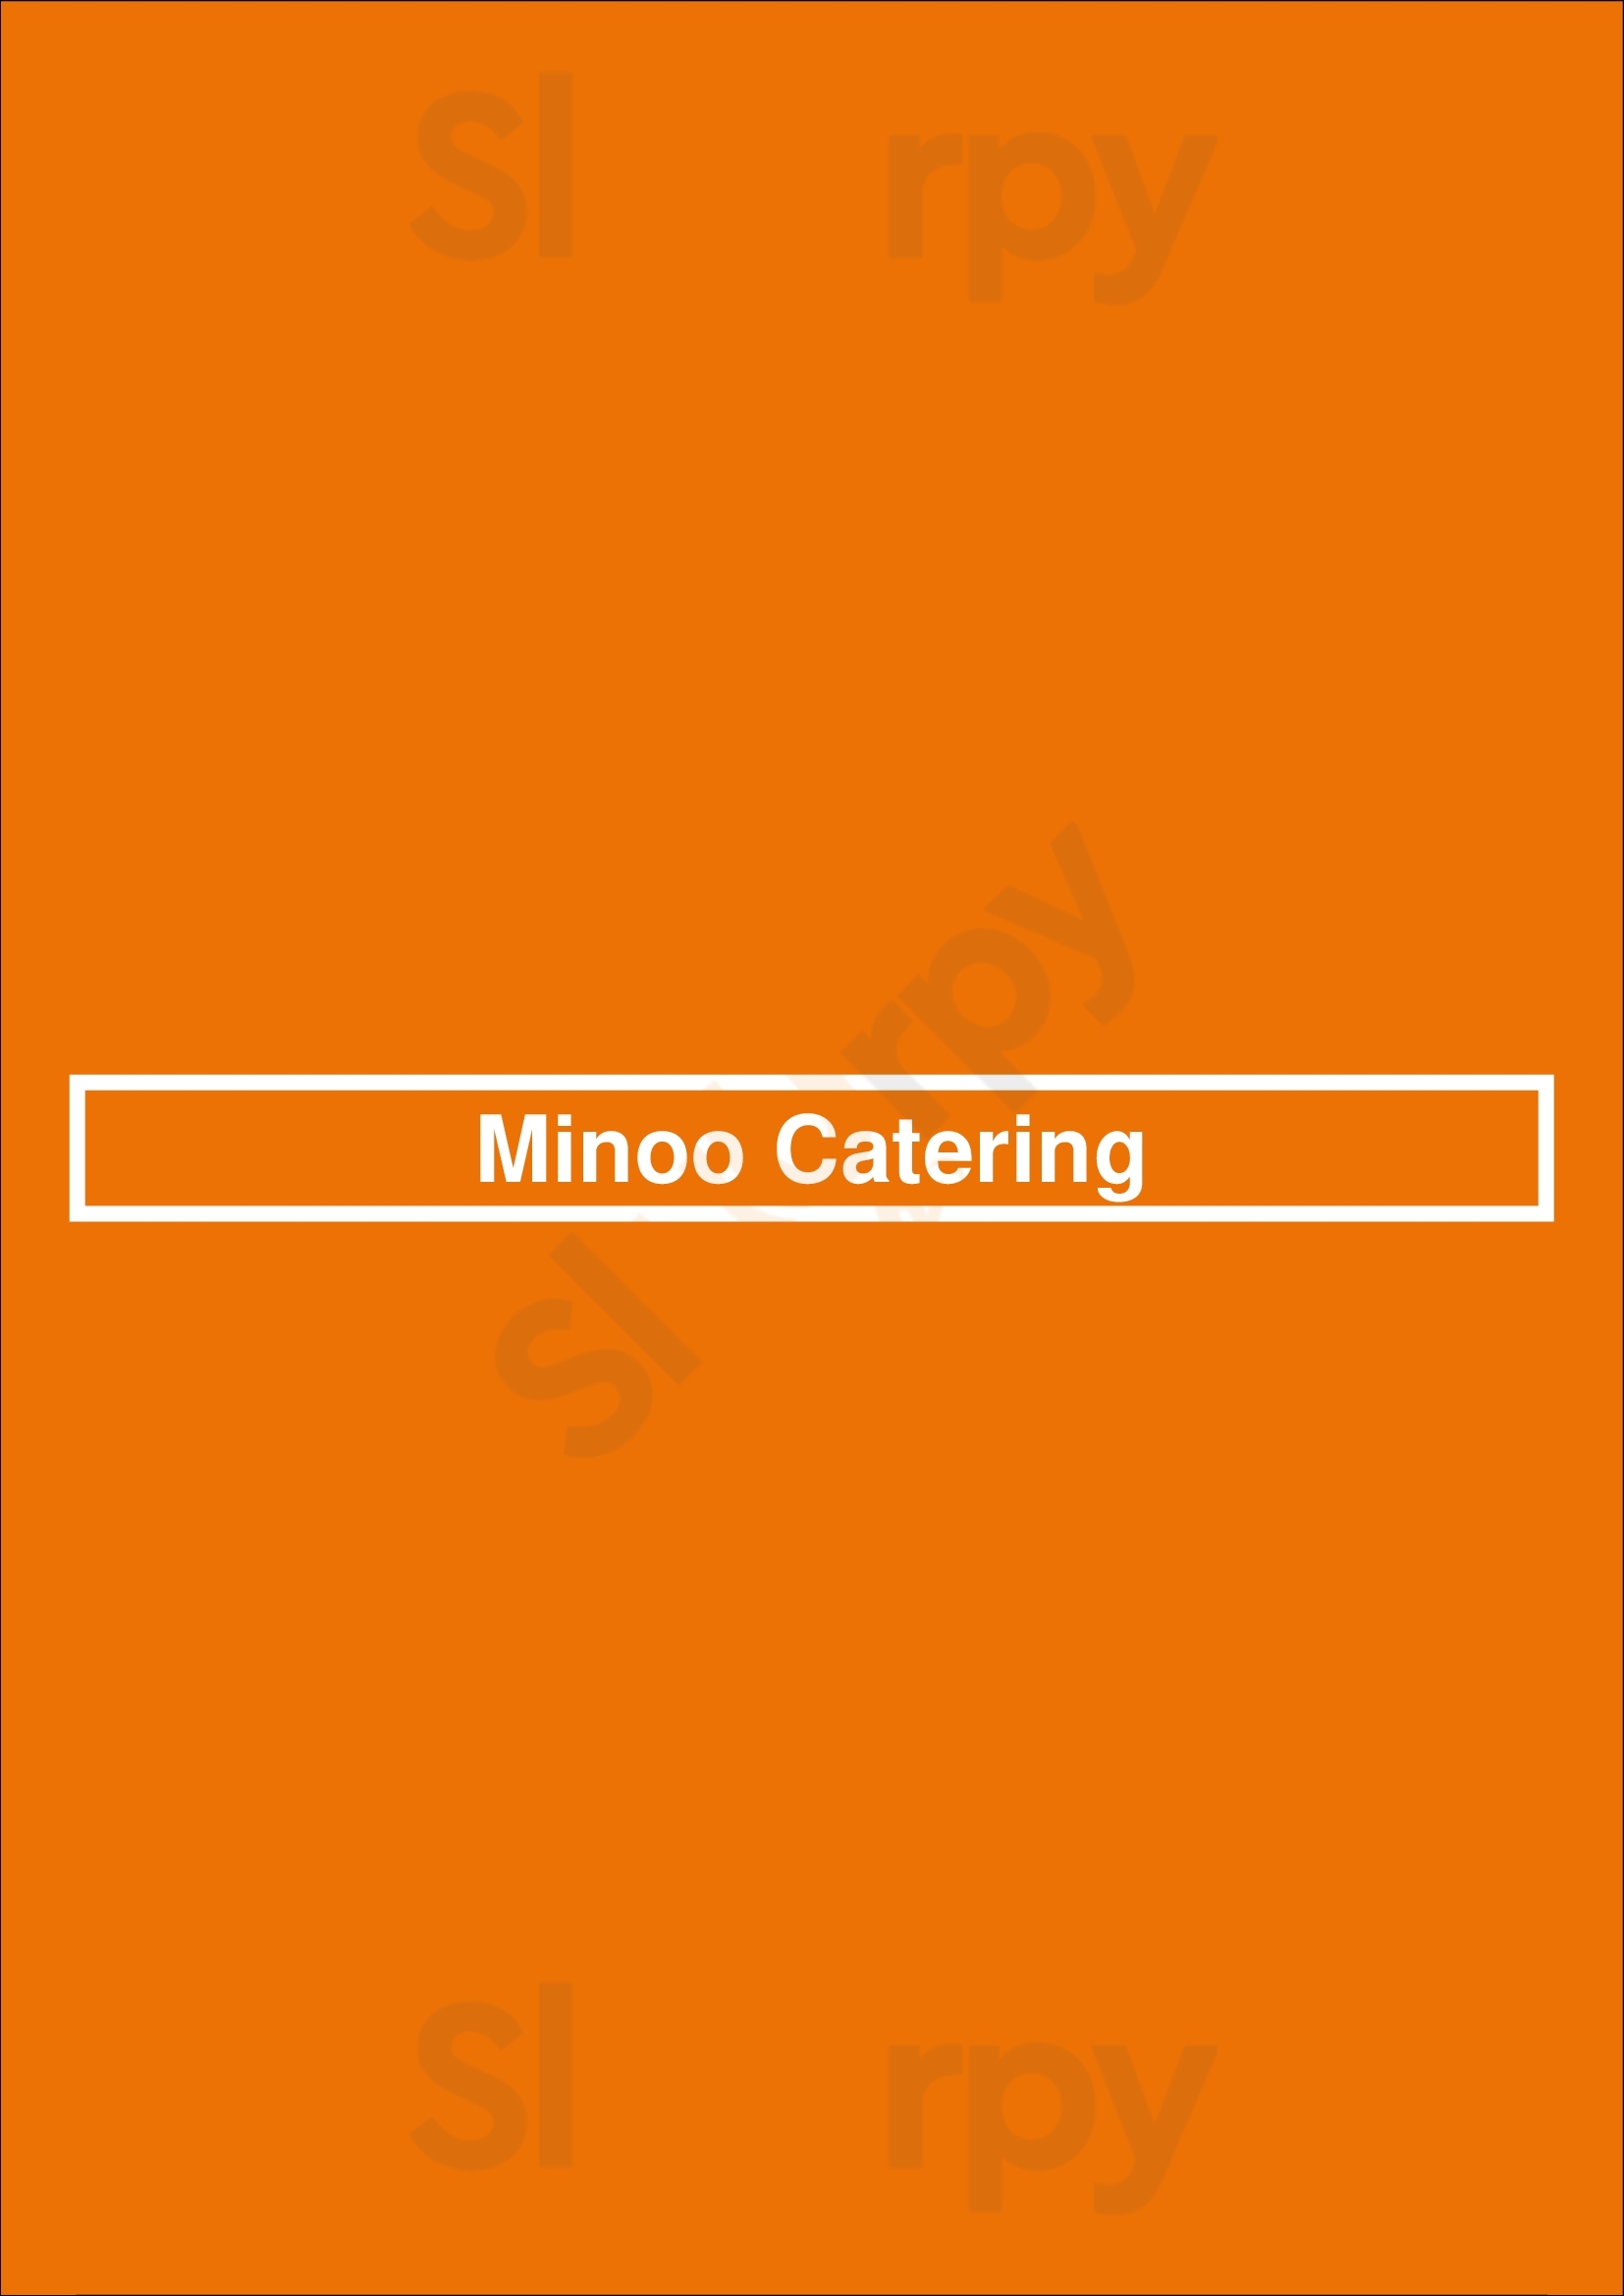 Minoo Catering Thornhill Menu - 1